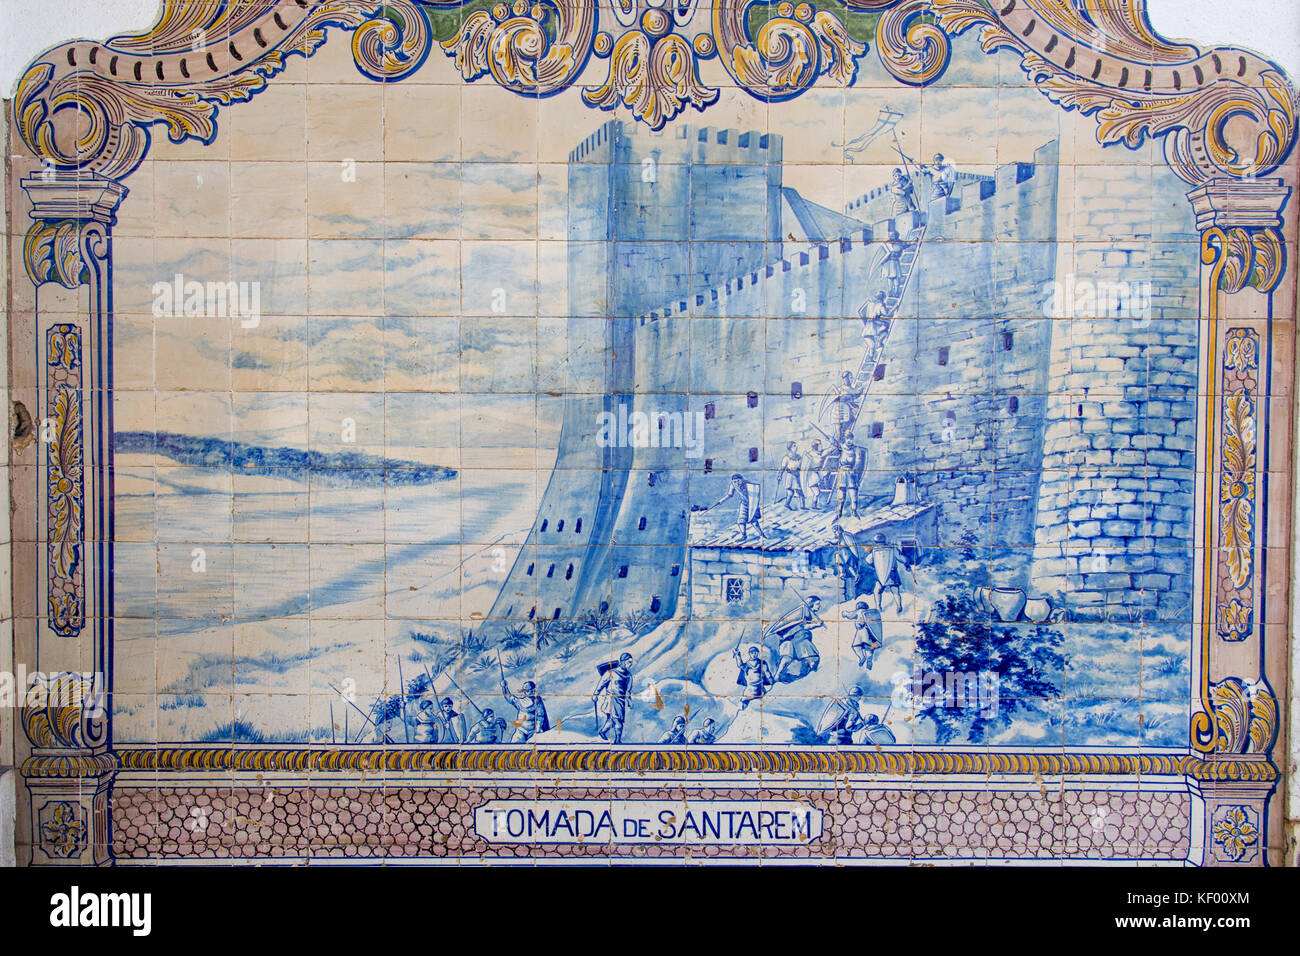 Blue ceramic tiles representing historic Tomada de Santarem, capture of Santarem, Santarem railway station, Portugal Stock Photo